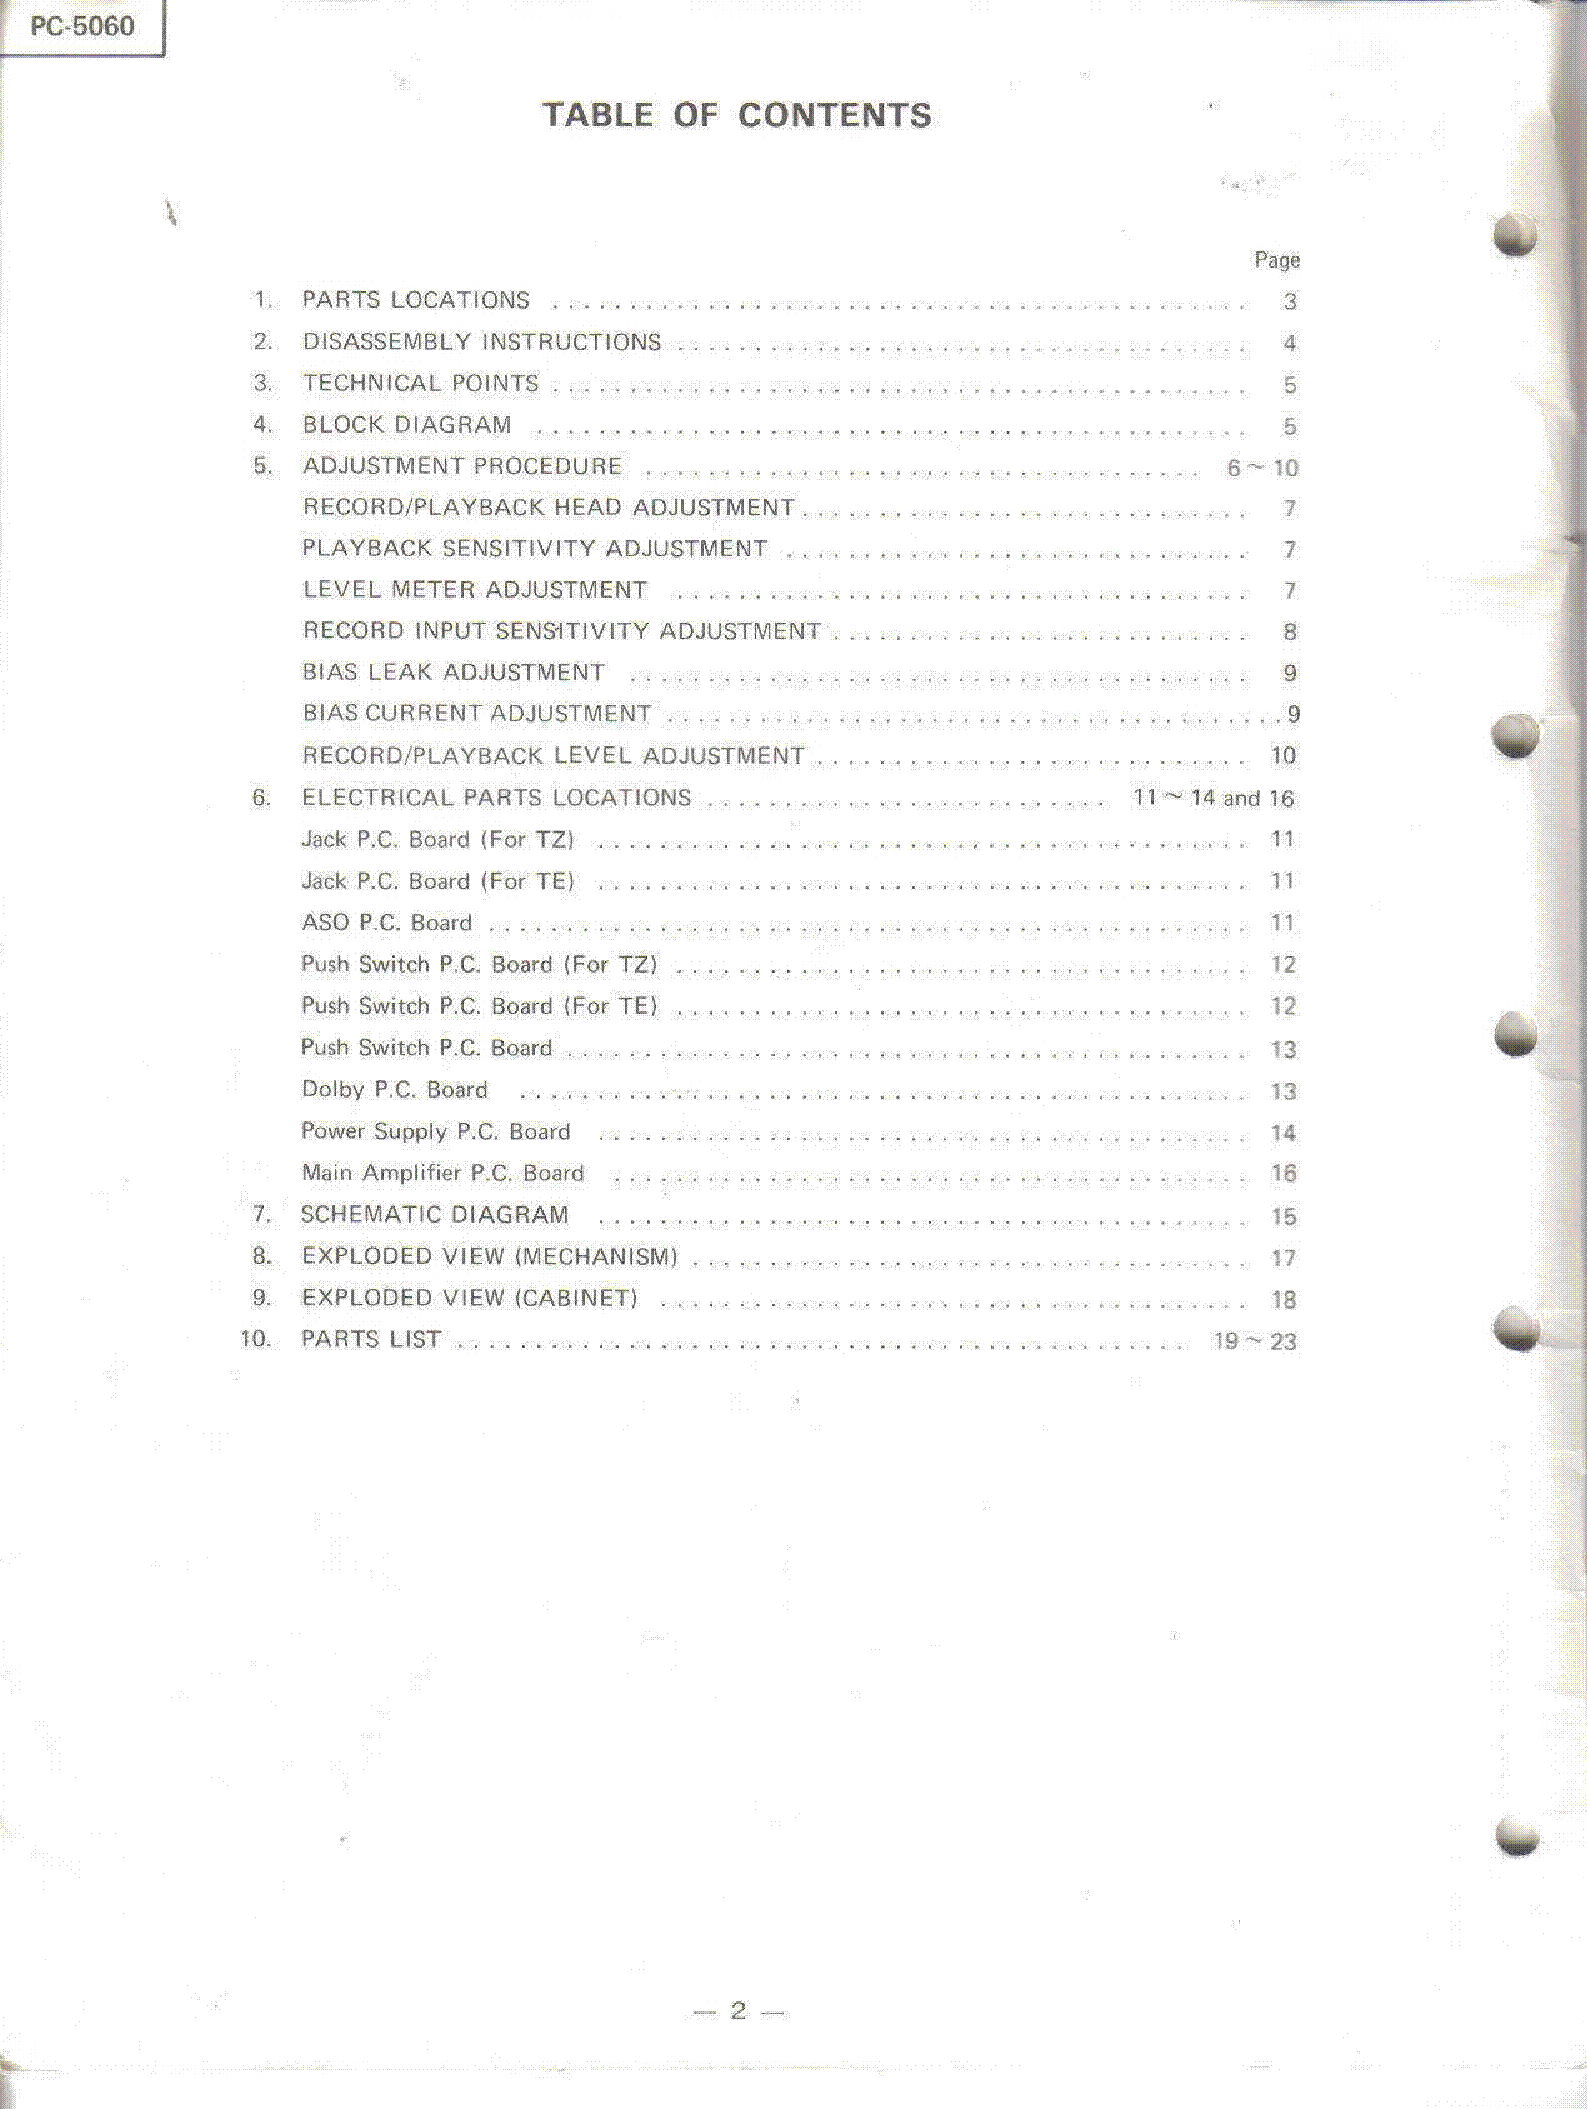 TOSHIBA PC-5060 SM service manual (2nd page)